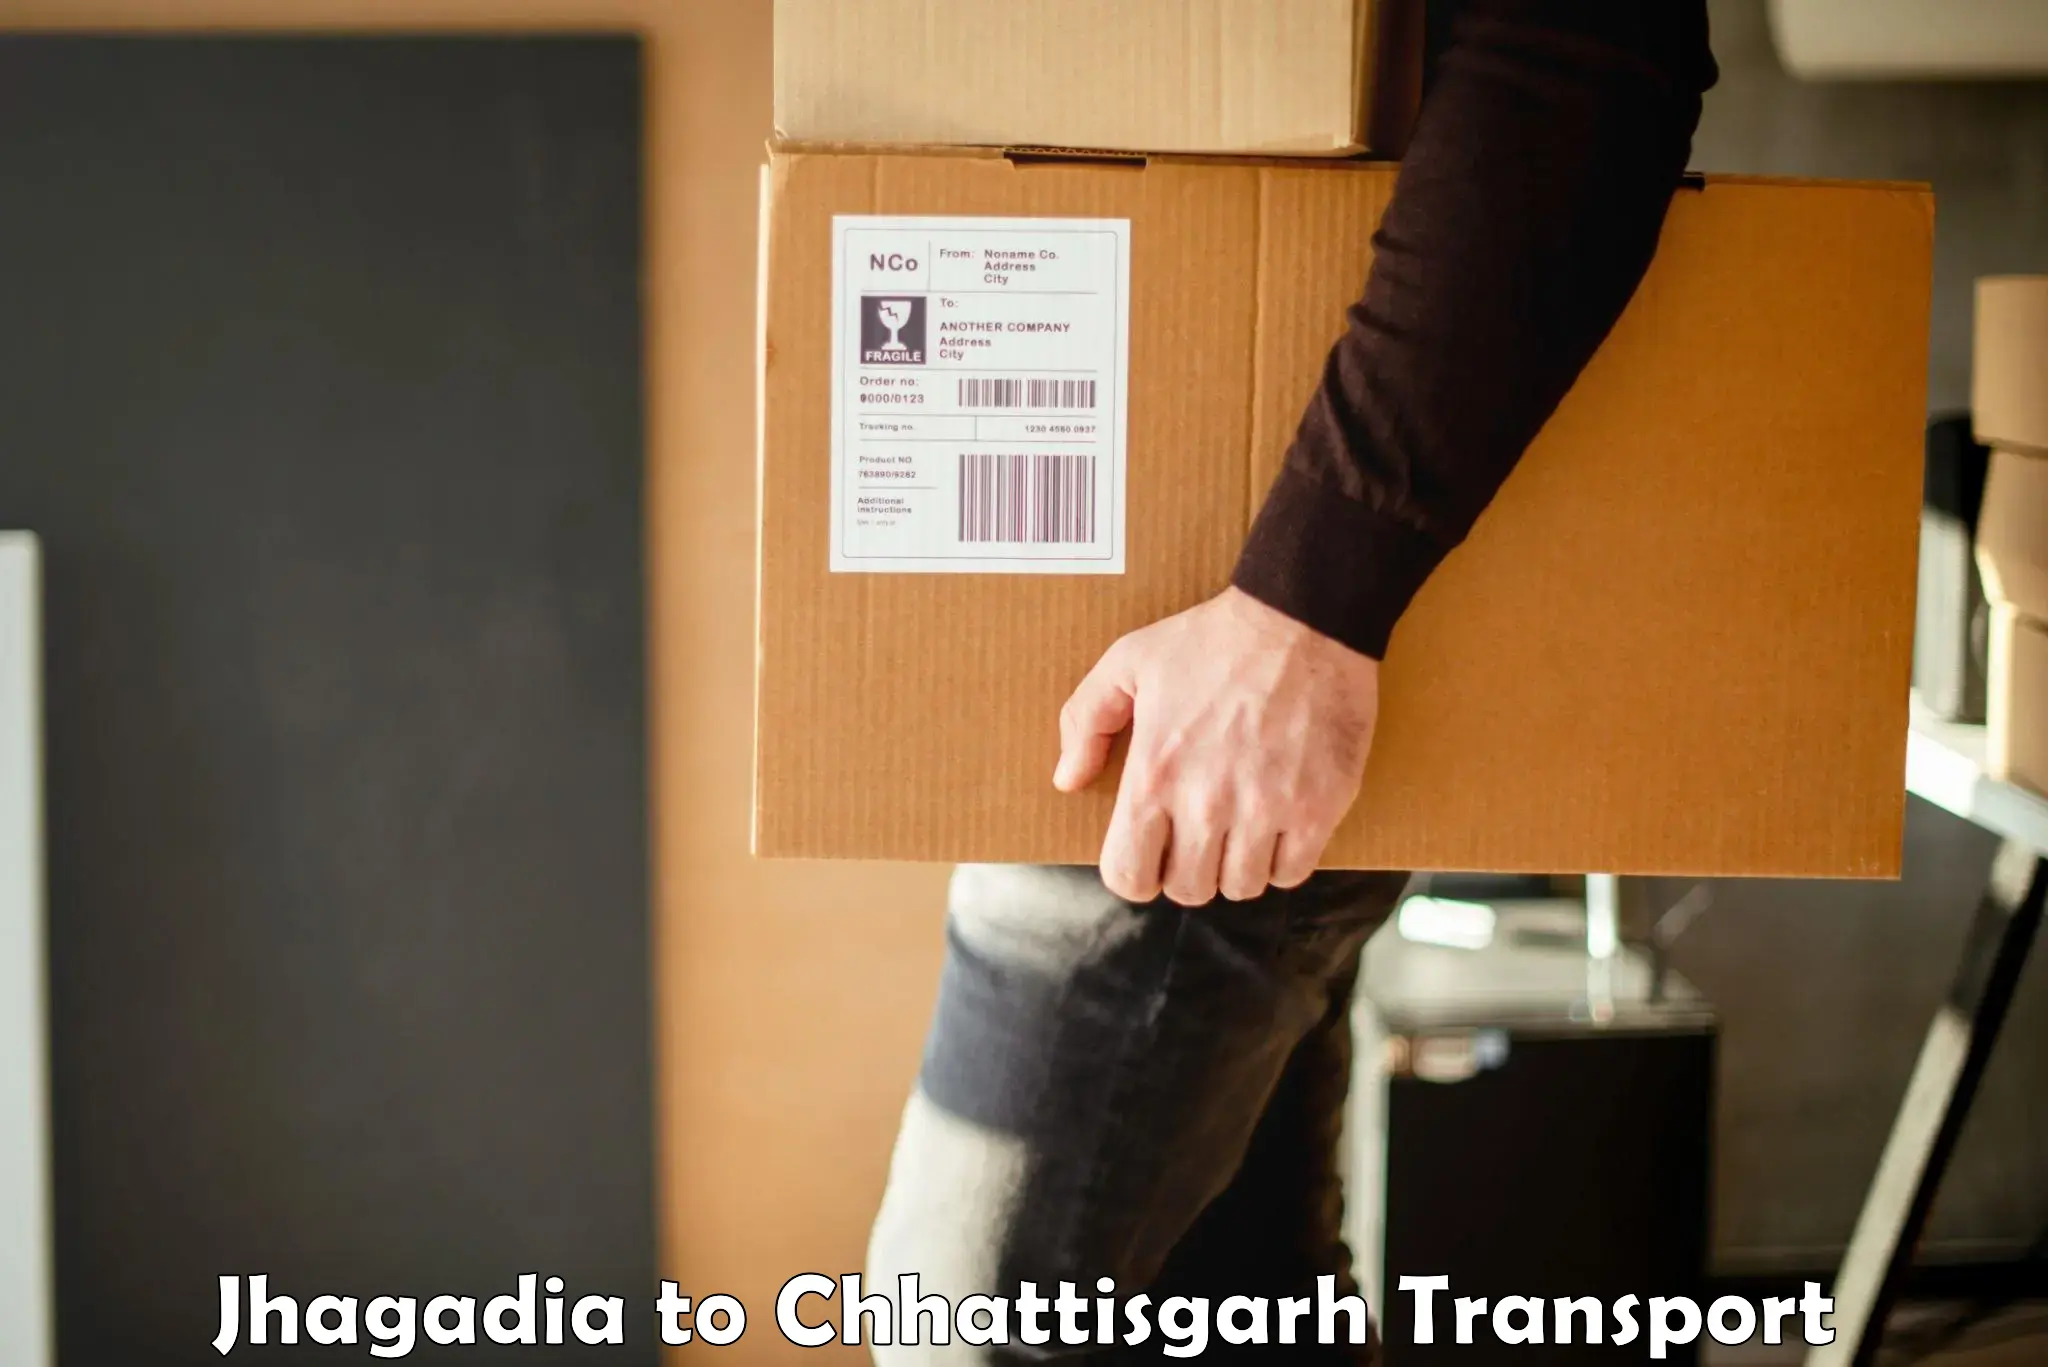 Truck transport companies in India Jhagadia to Patna Chhattisgarh